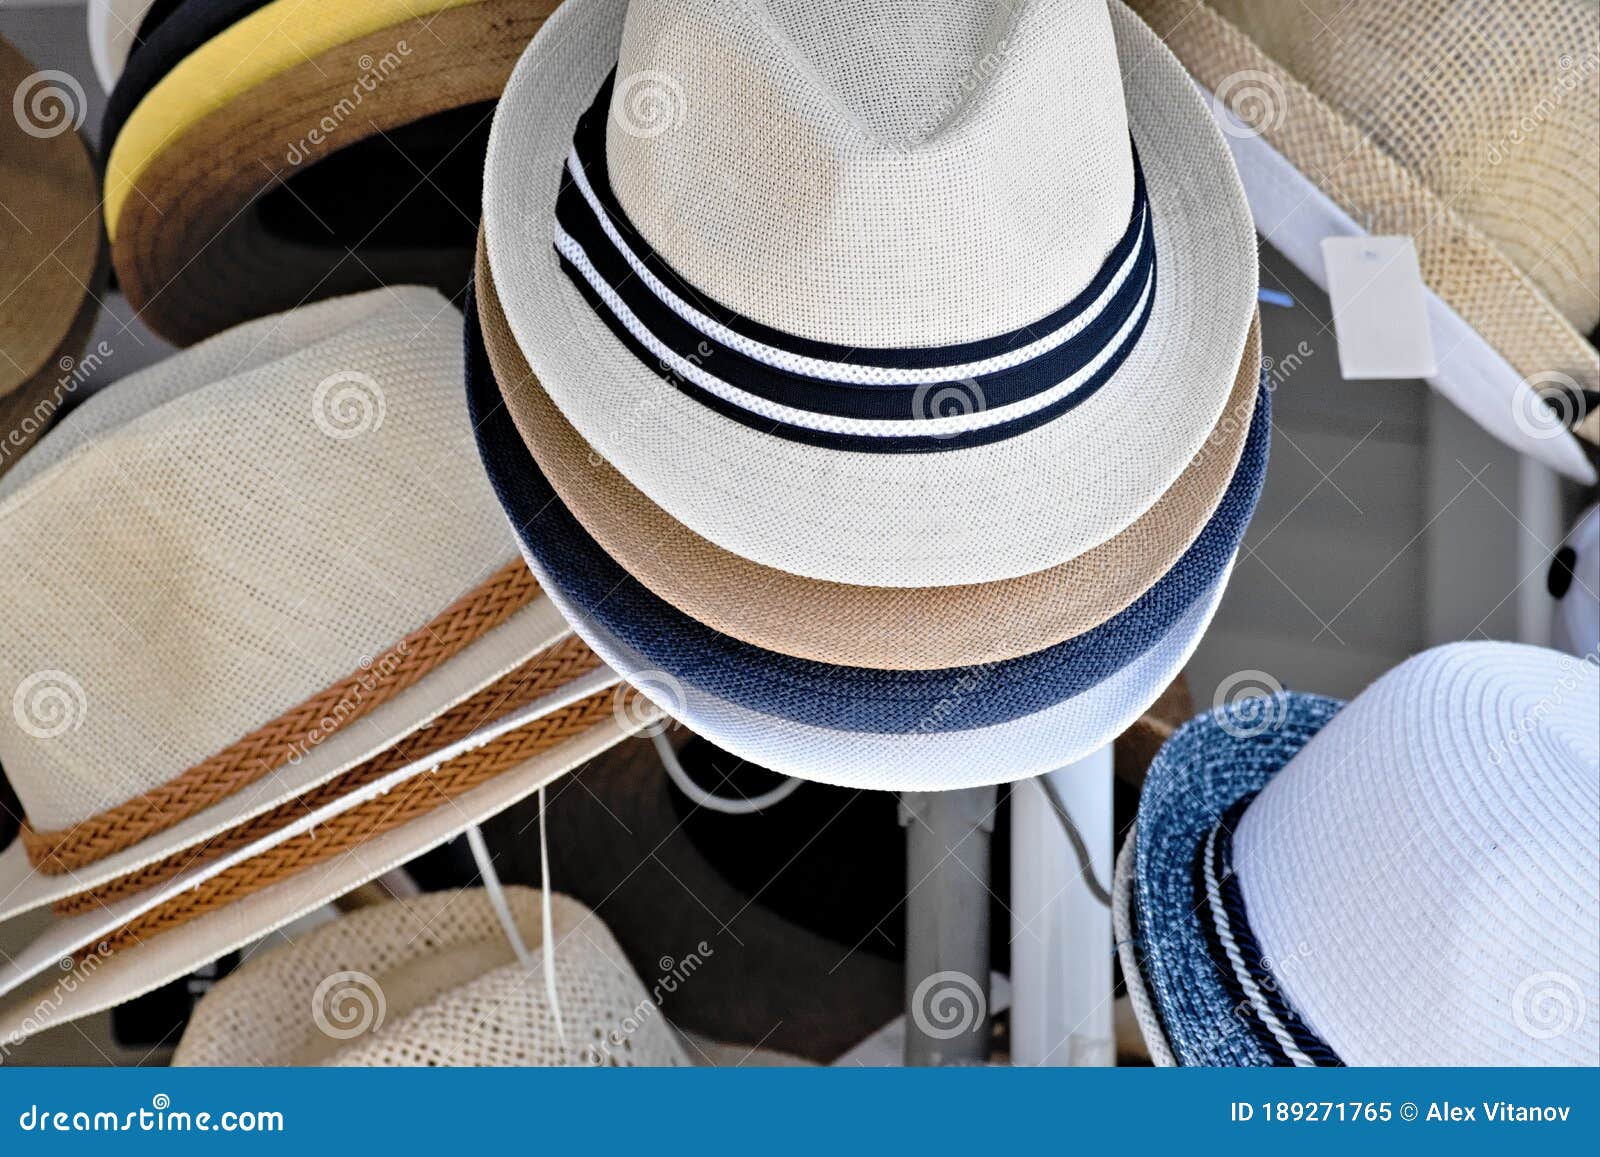 straw summer hats on sale